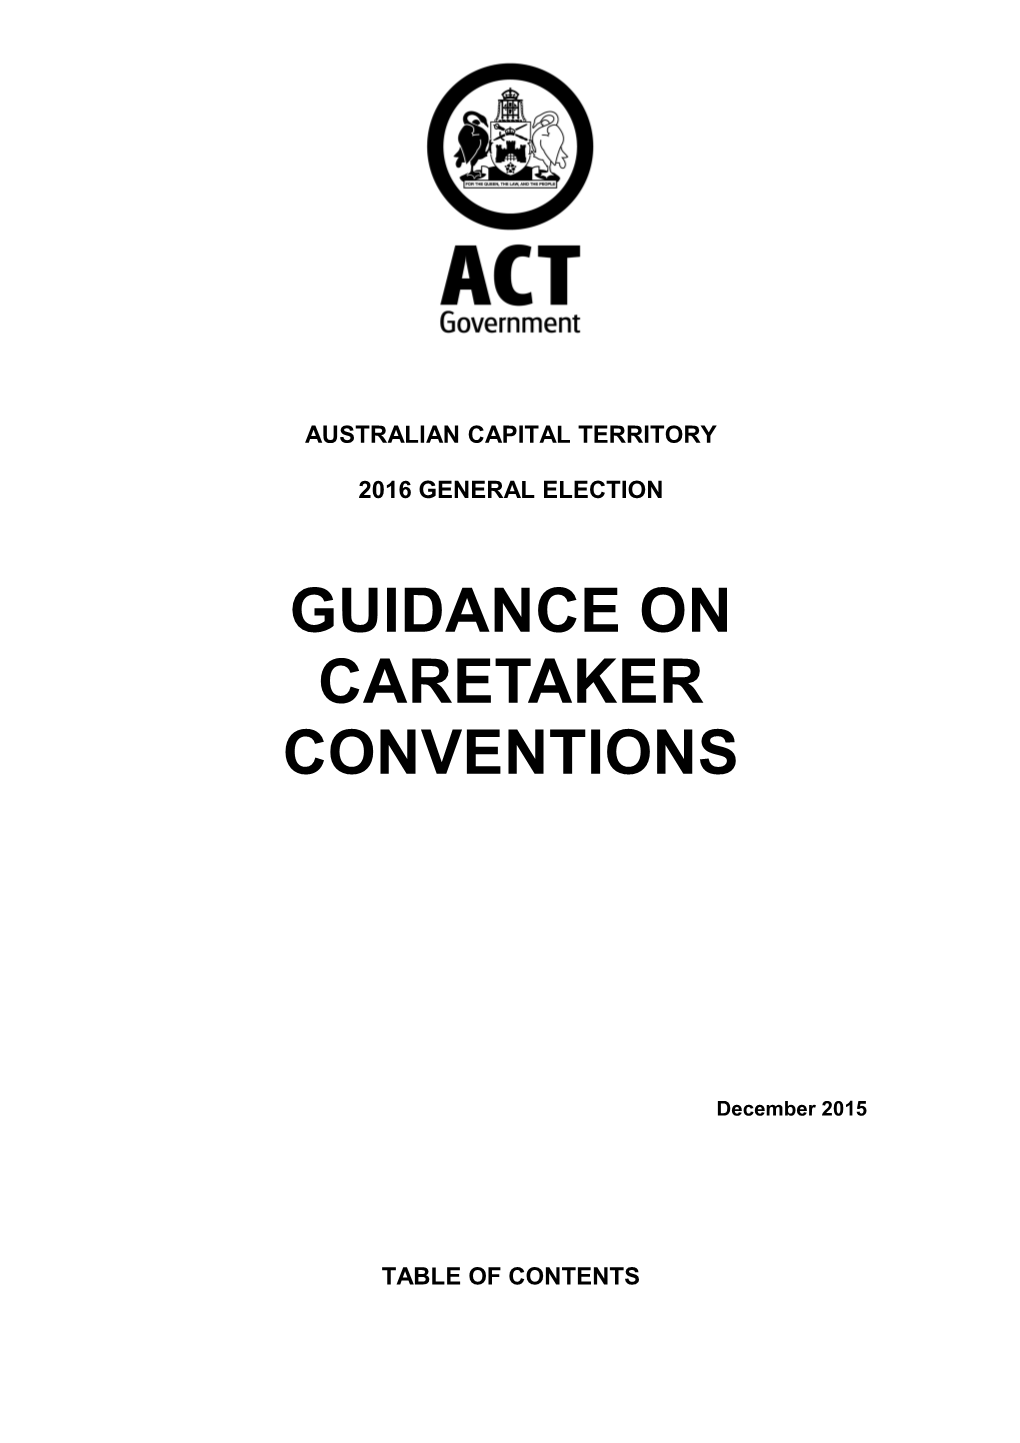 2012 ACT Caretaker Conventions